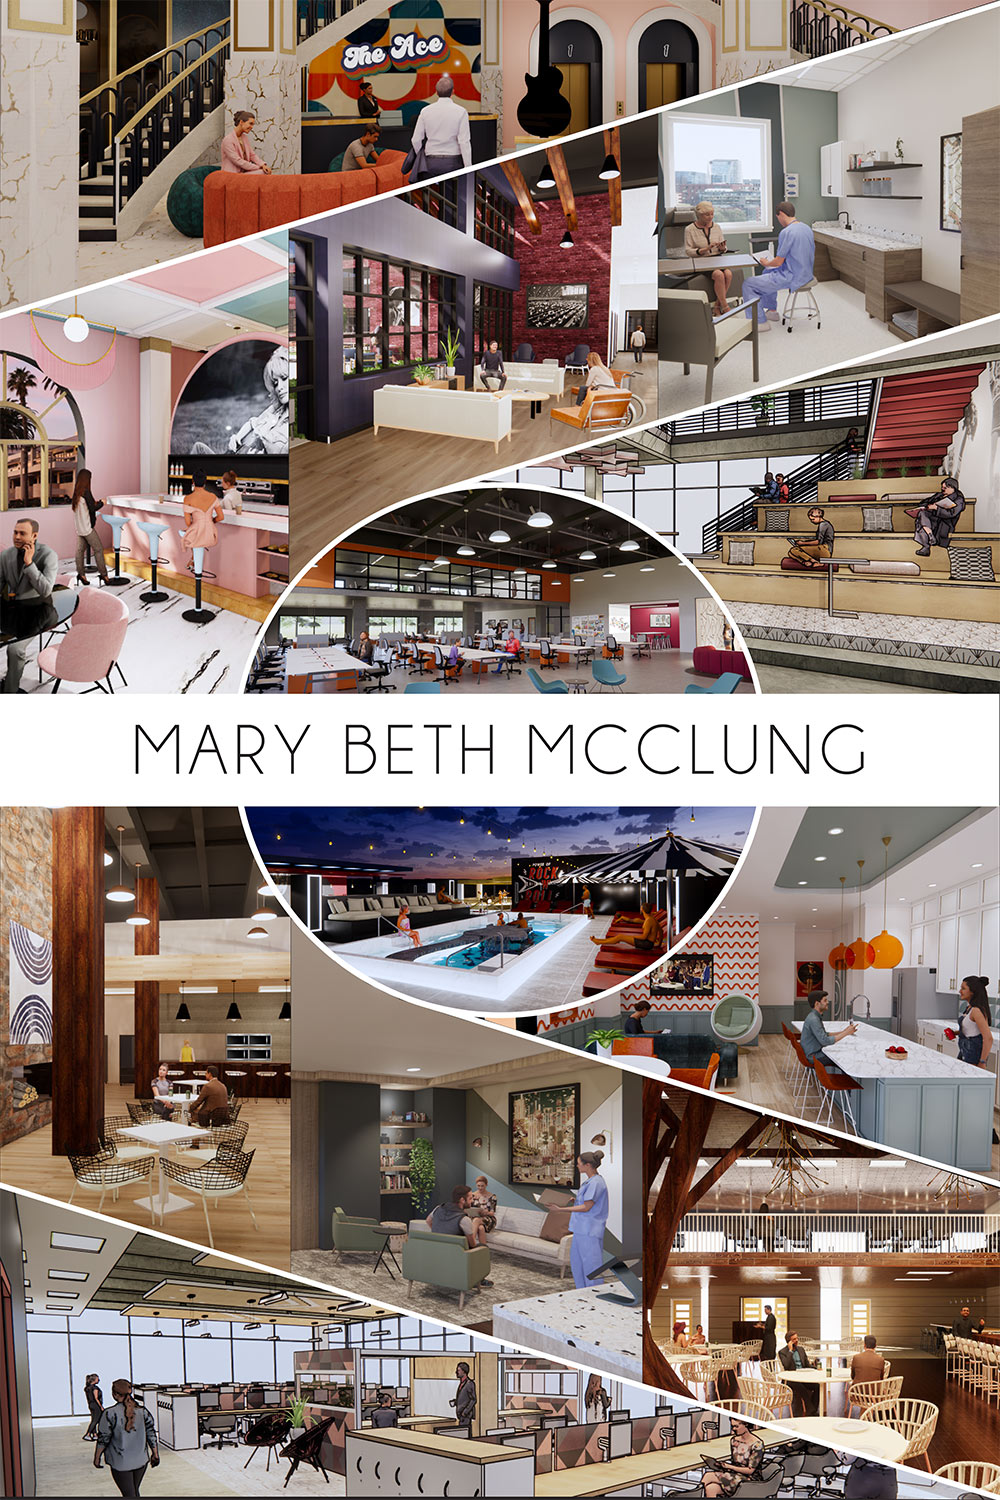 senior interior design board by Mary Beth Mcclung